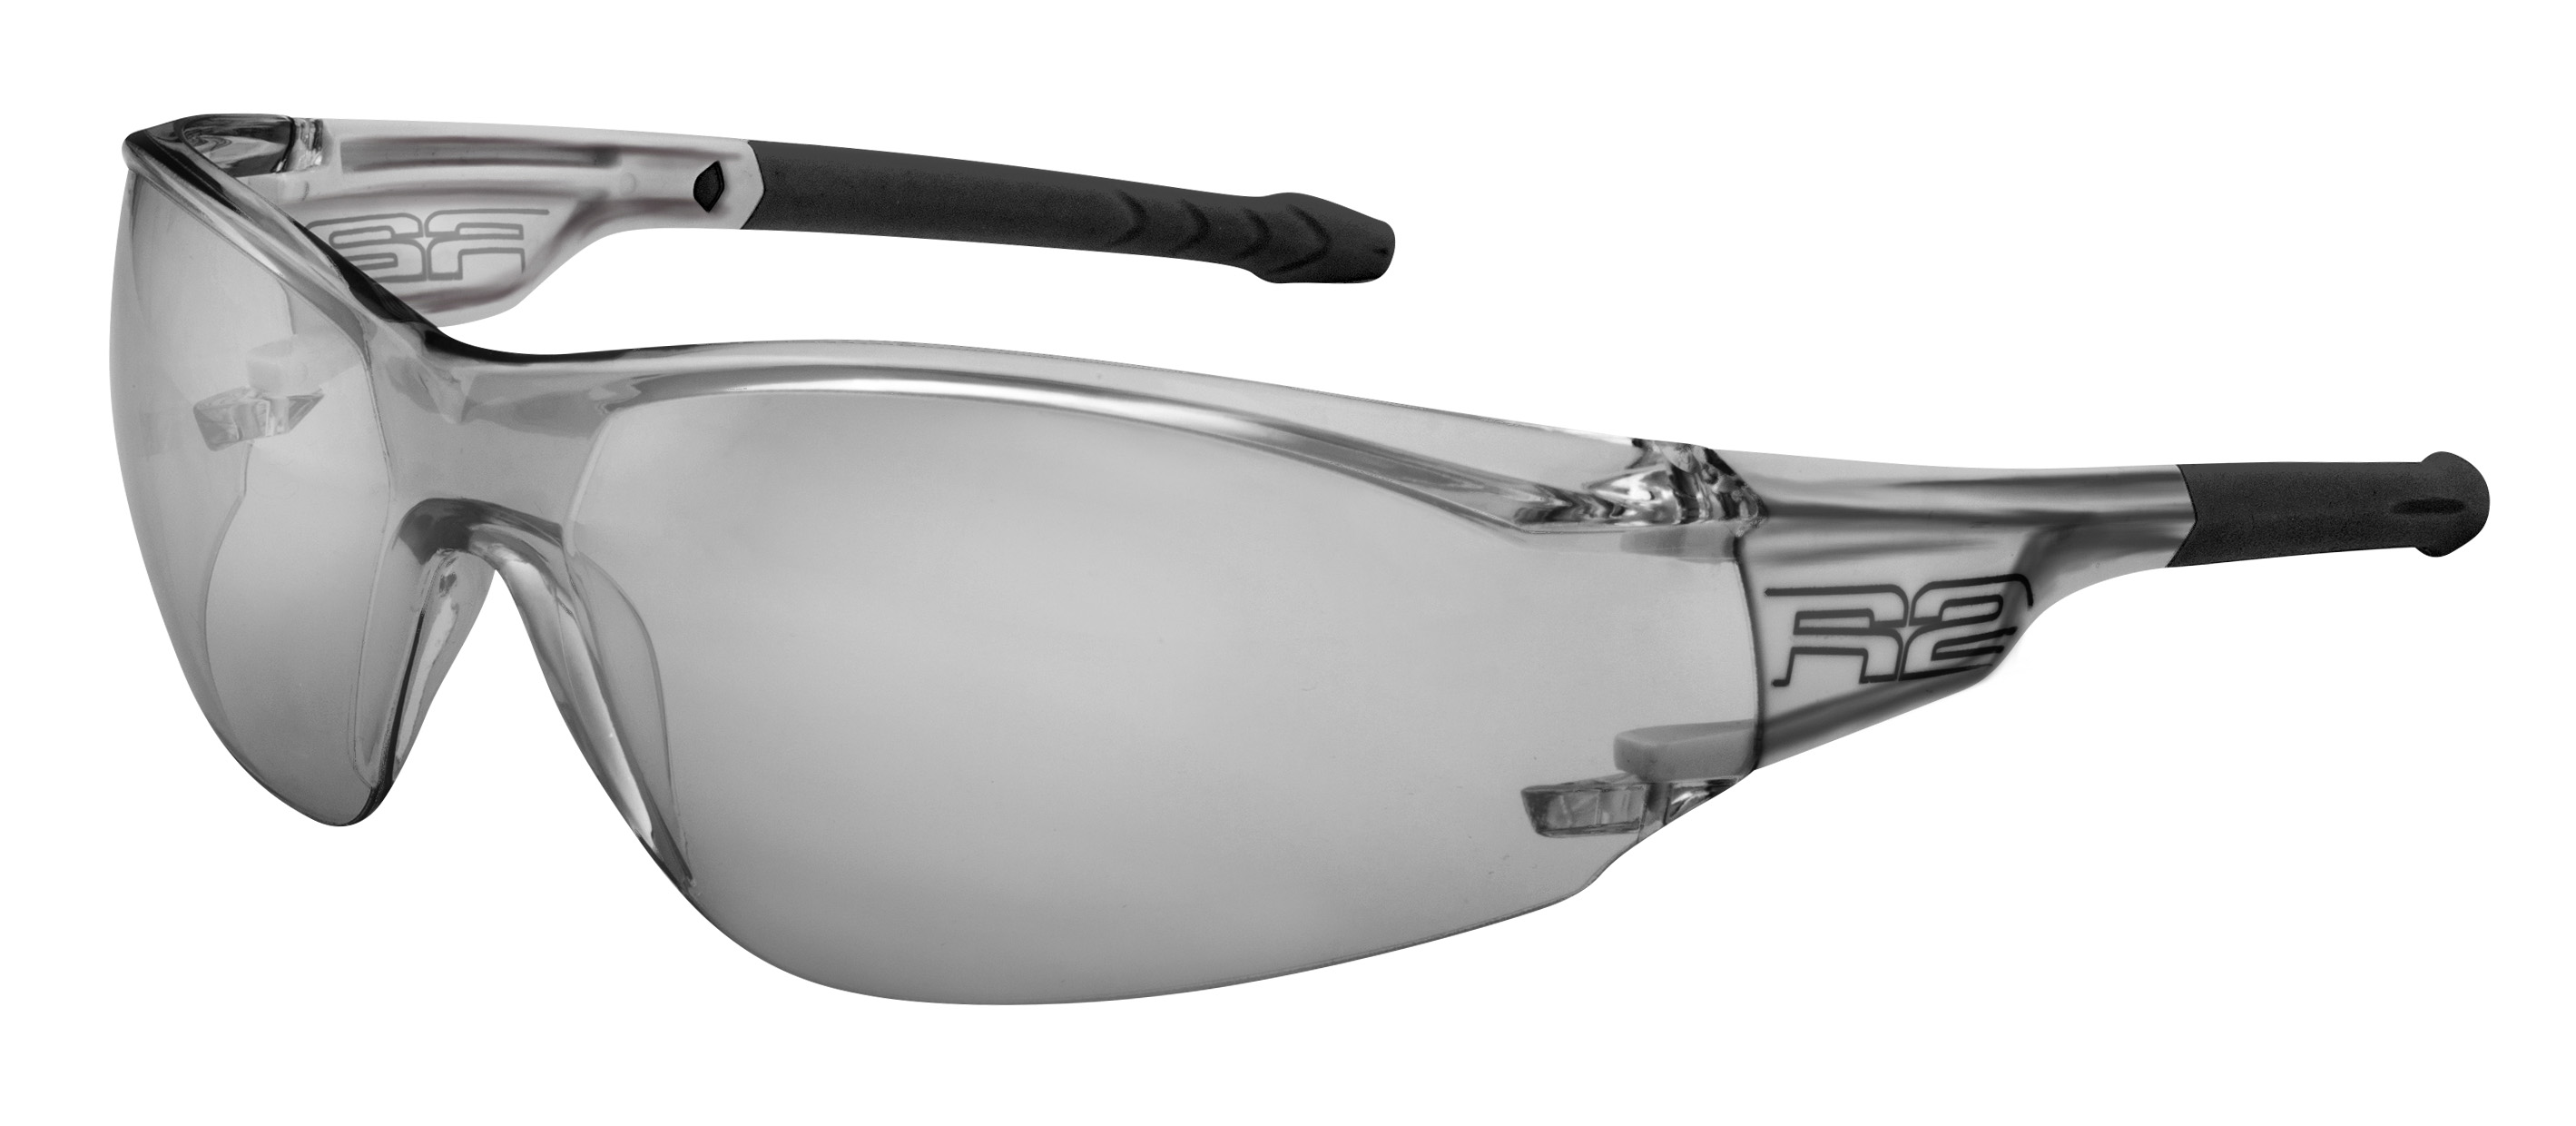 Sport sunglasses R2 ALLIGATOR2 AT112C standard